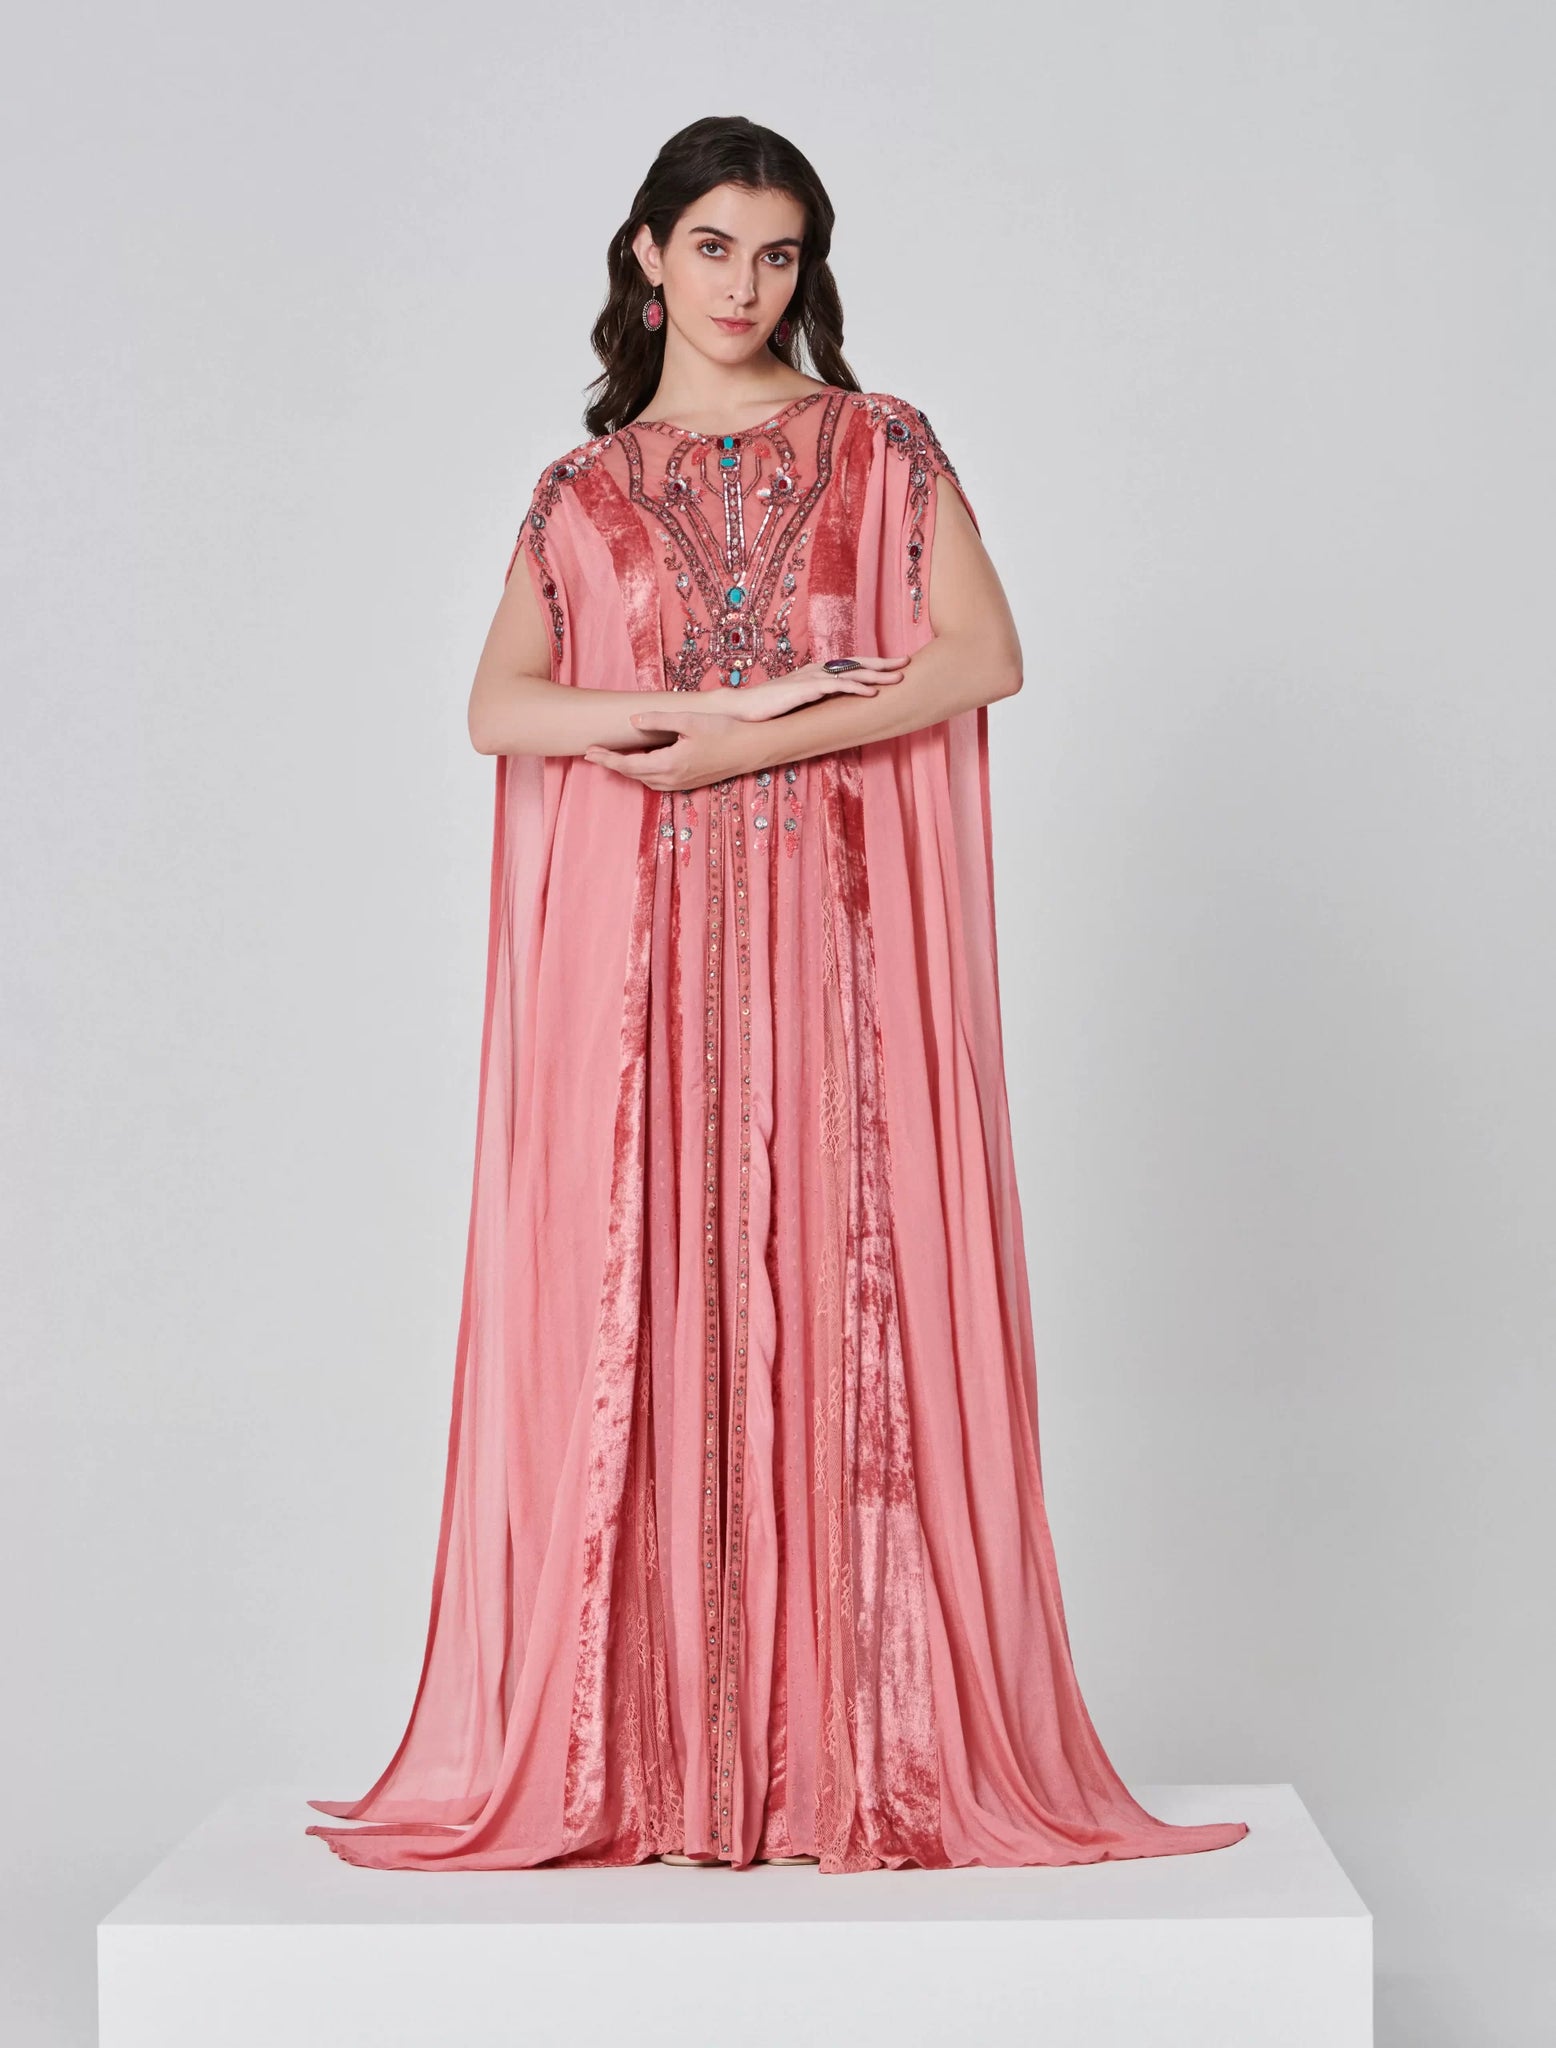 Nilara dress